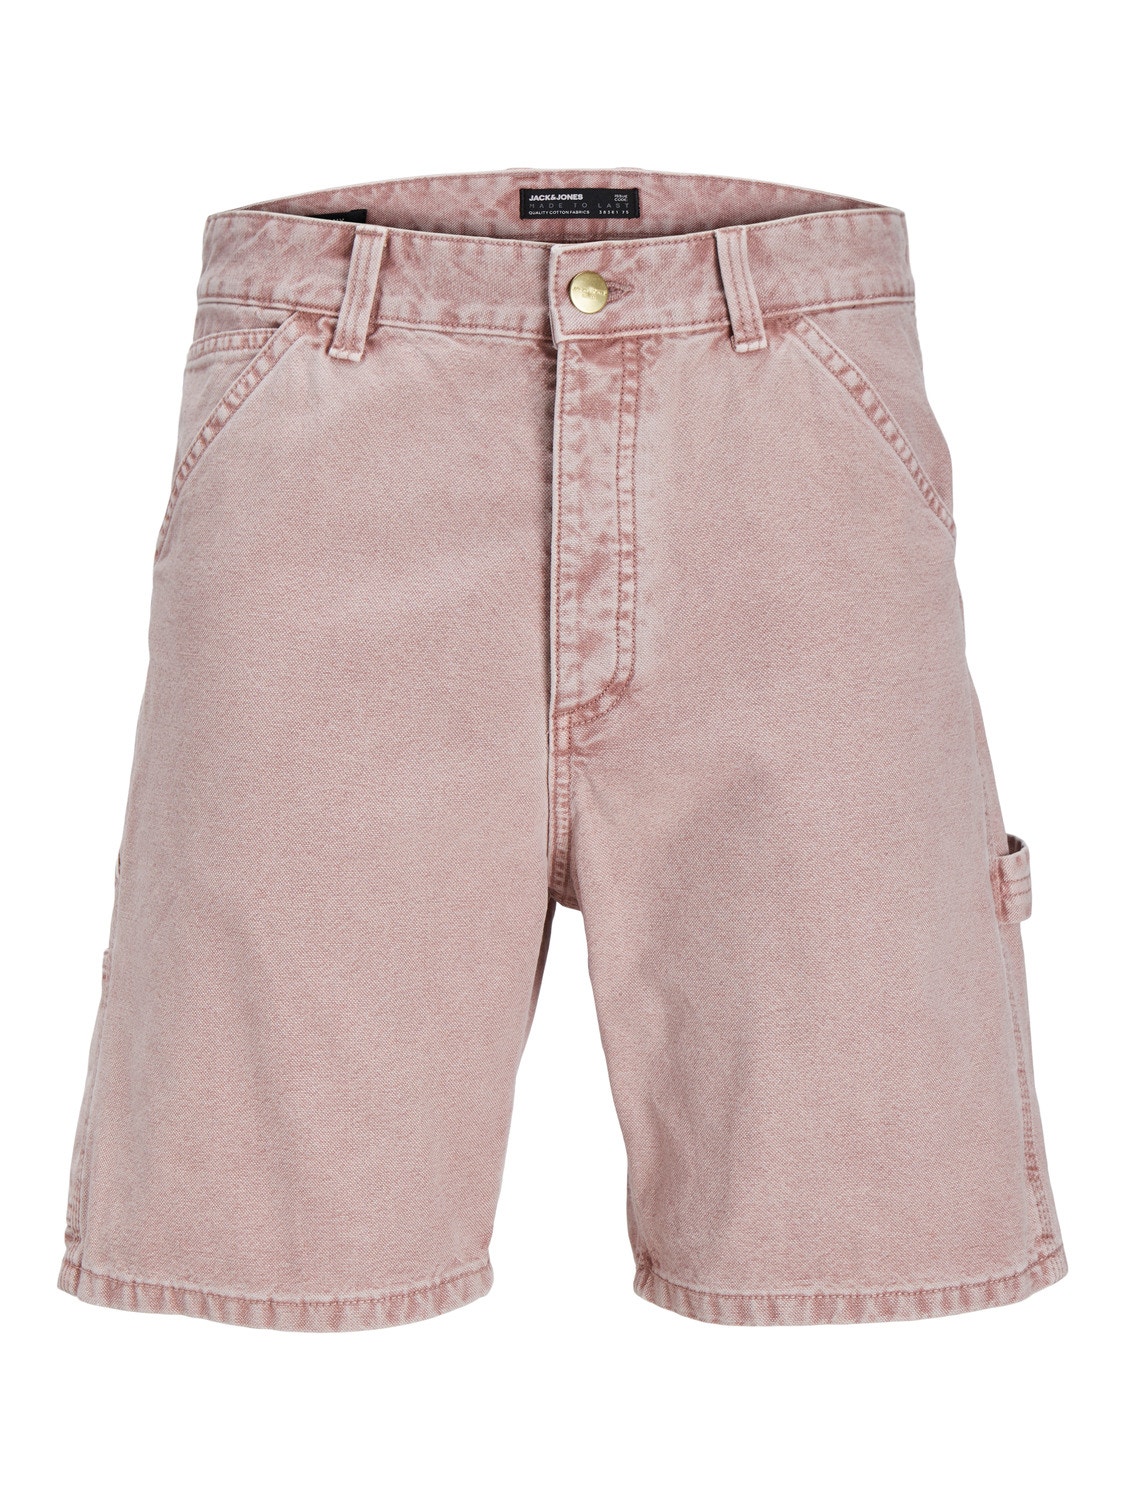 Jack & Jones Loose Fit Jeans Shorts -Woodrose - 12252814